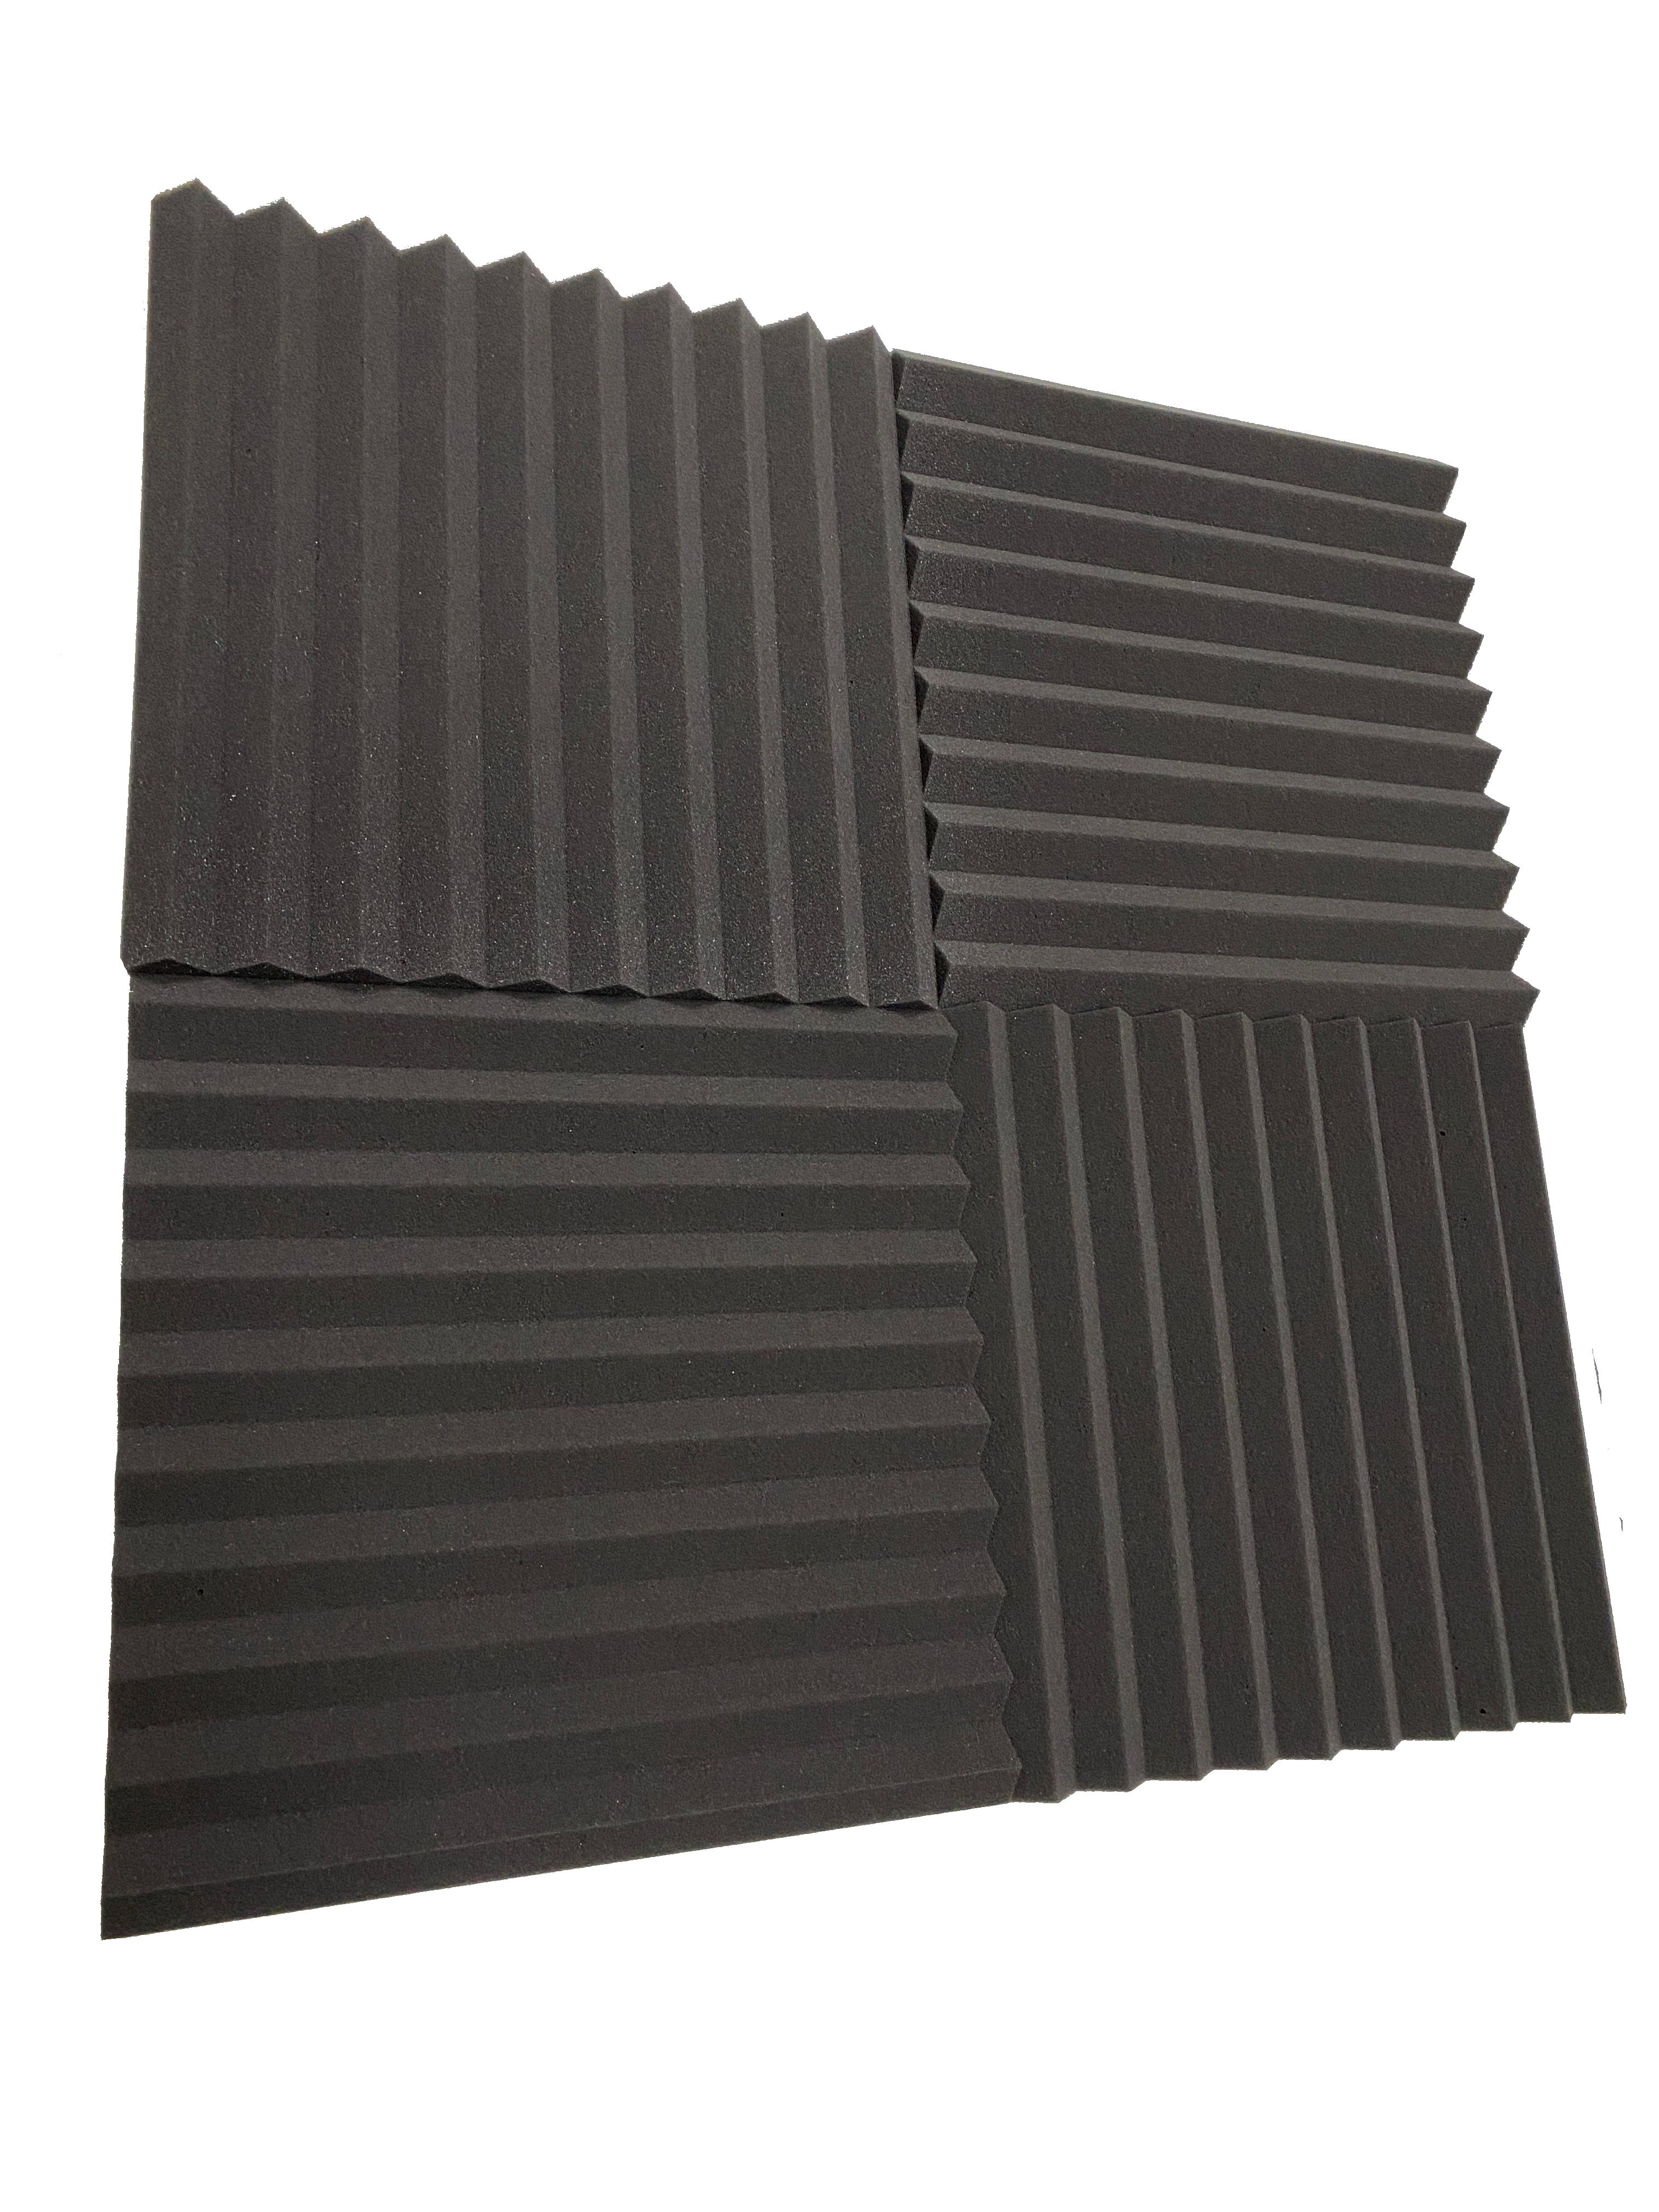 Kaufen dunkelgrau Wedge 15&quot; Acoustic Studio Foam Tile Pack - 24 Tiles, 3.48sqm Coverage